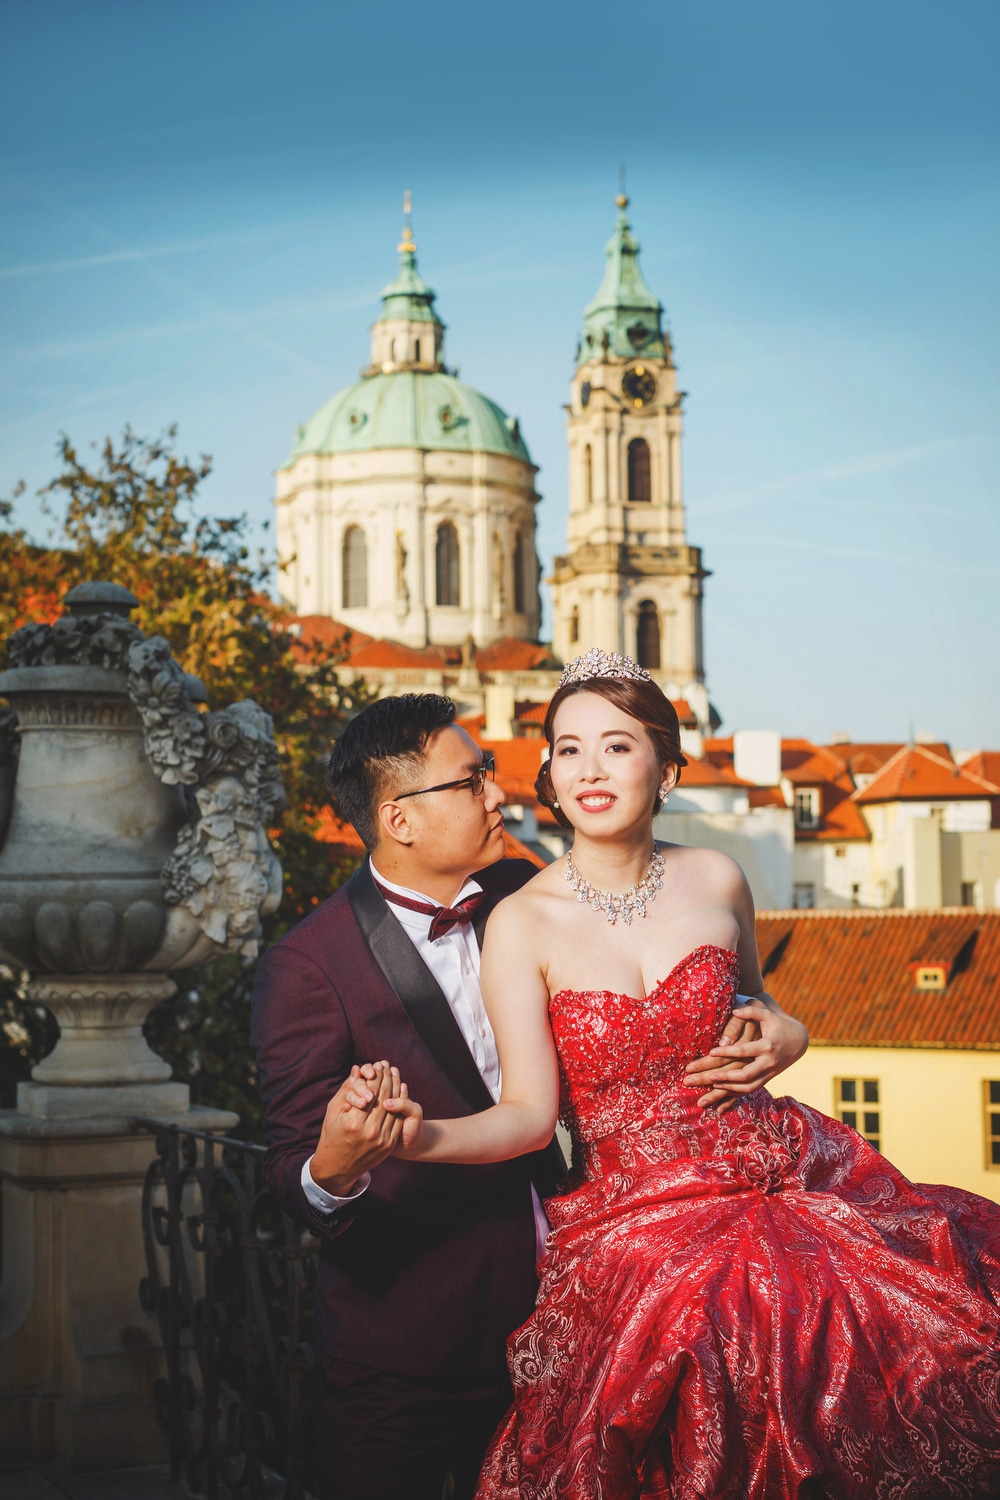 Prague Vrtba Garden, St. Nicholas Church, red dress, young couple embracing, holding hands